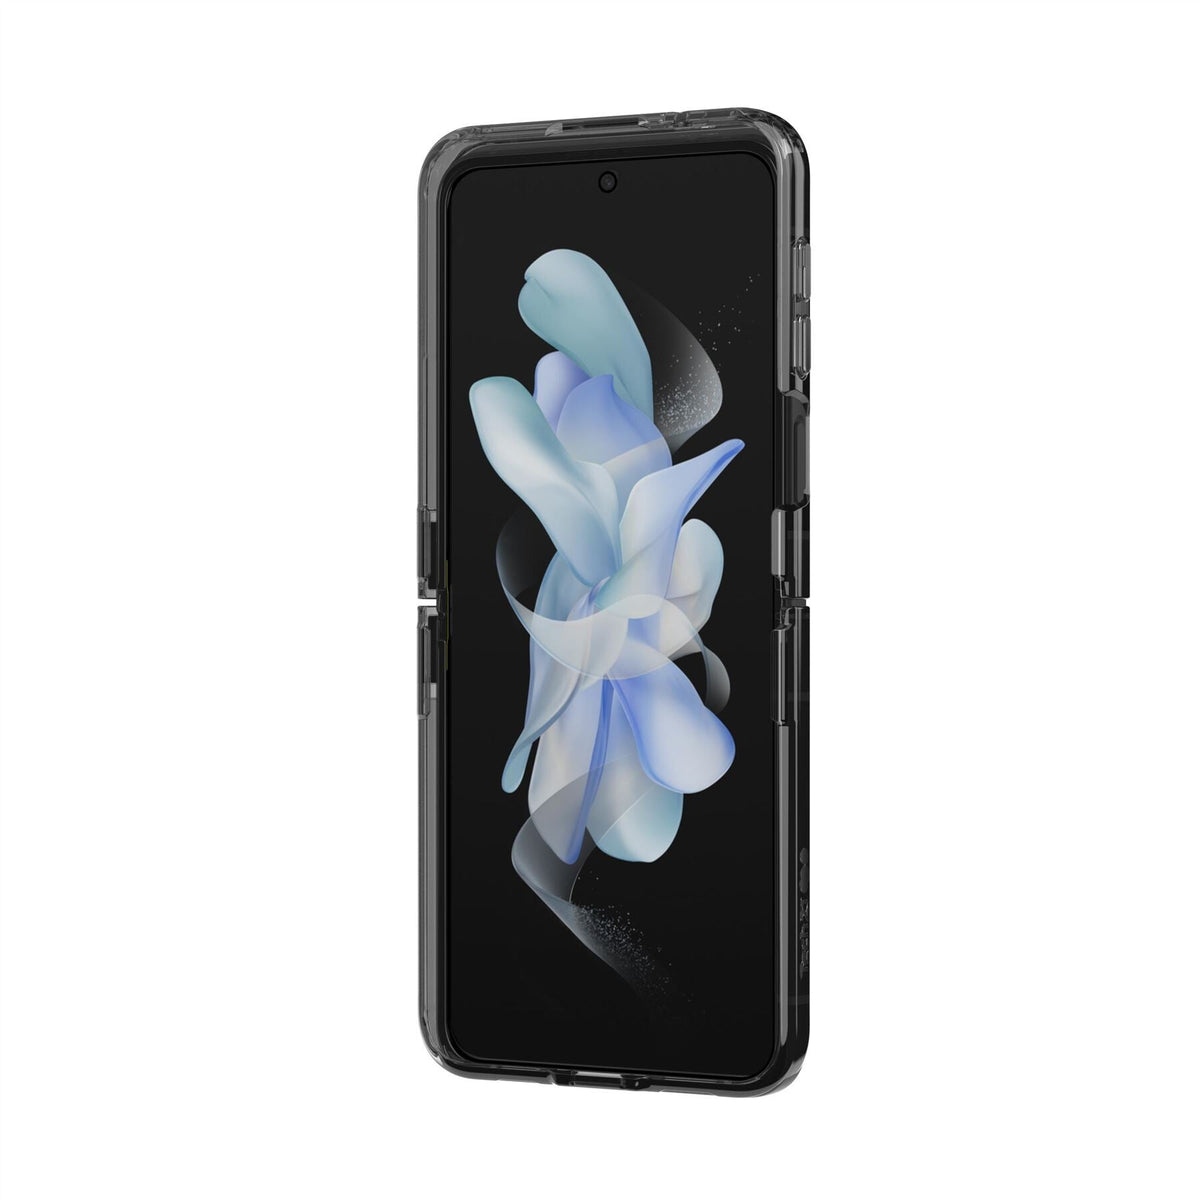 Tech21 T21-9556 mobile phone case for Galaxy Z Flip4 in Grey